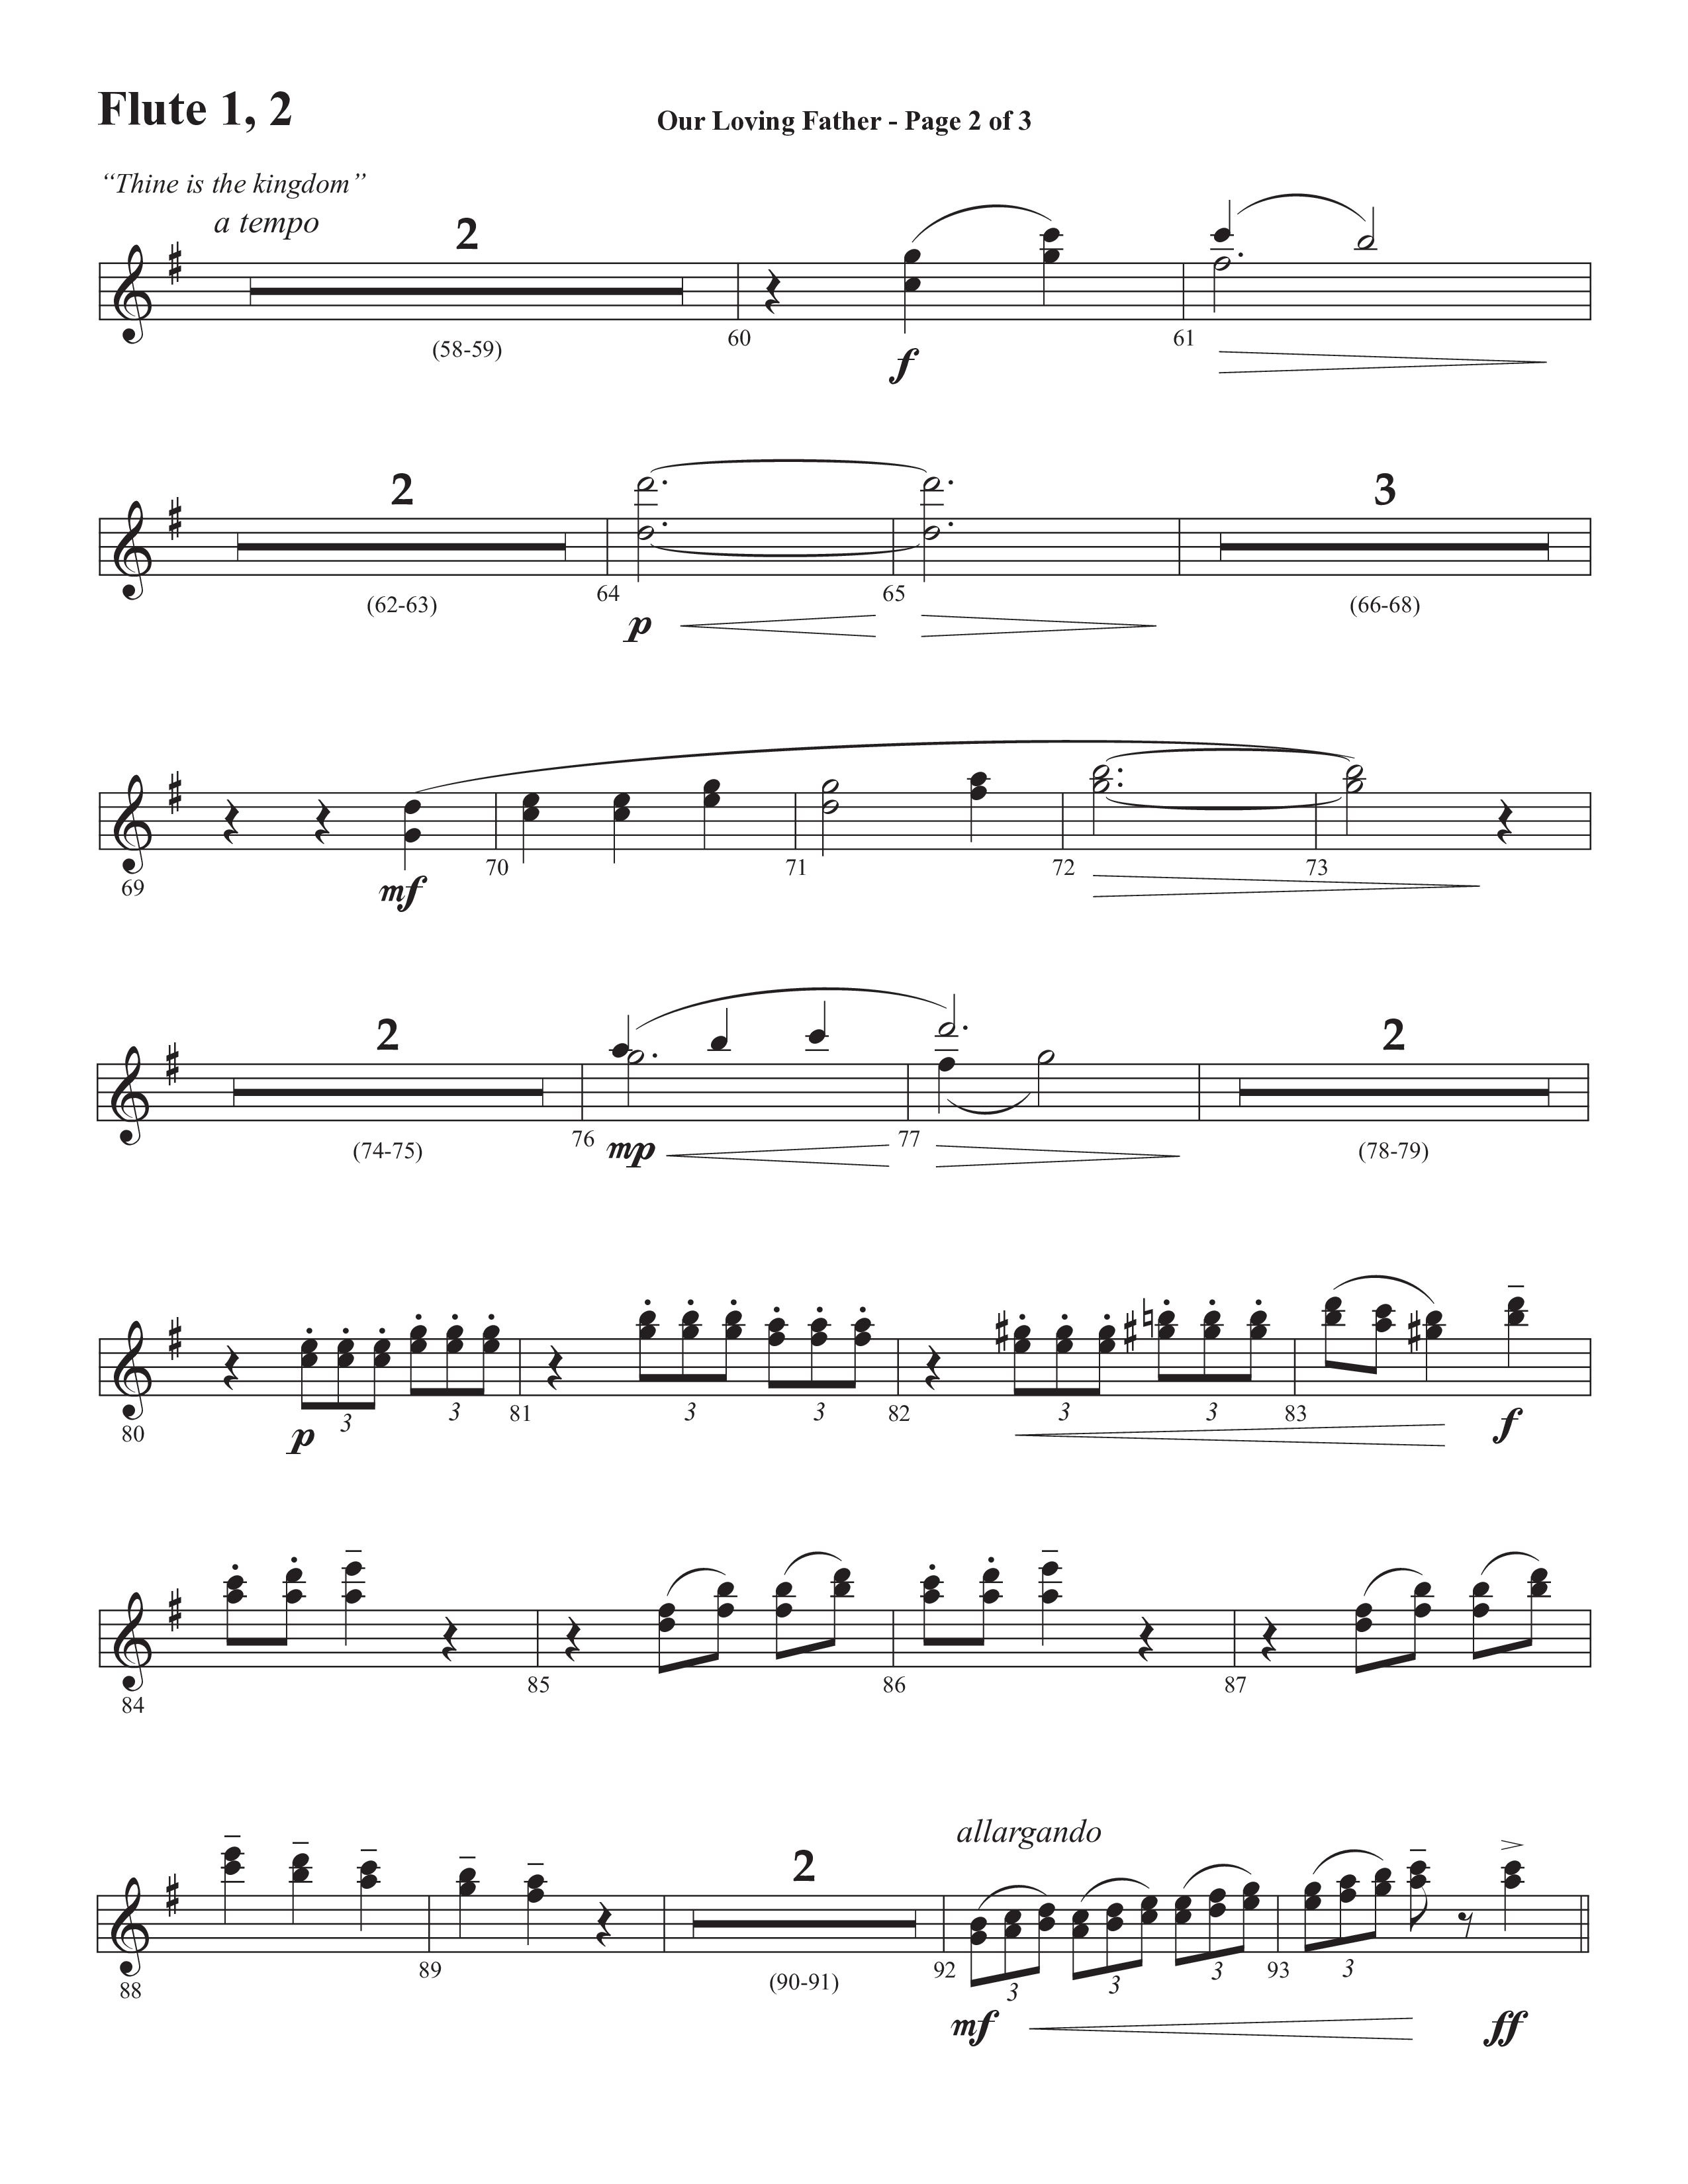 Our Loving Father (Choral Anthem SATB) Flute 1/2 (Semsen Music / Arr. Phillip Keveren)